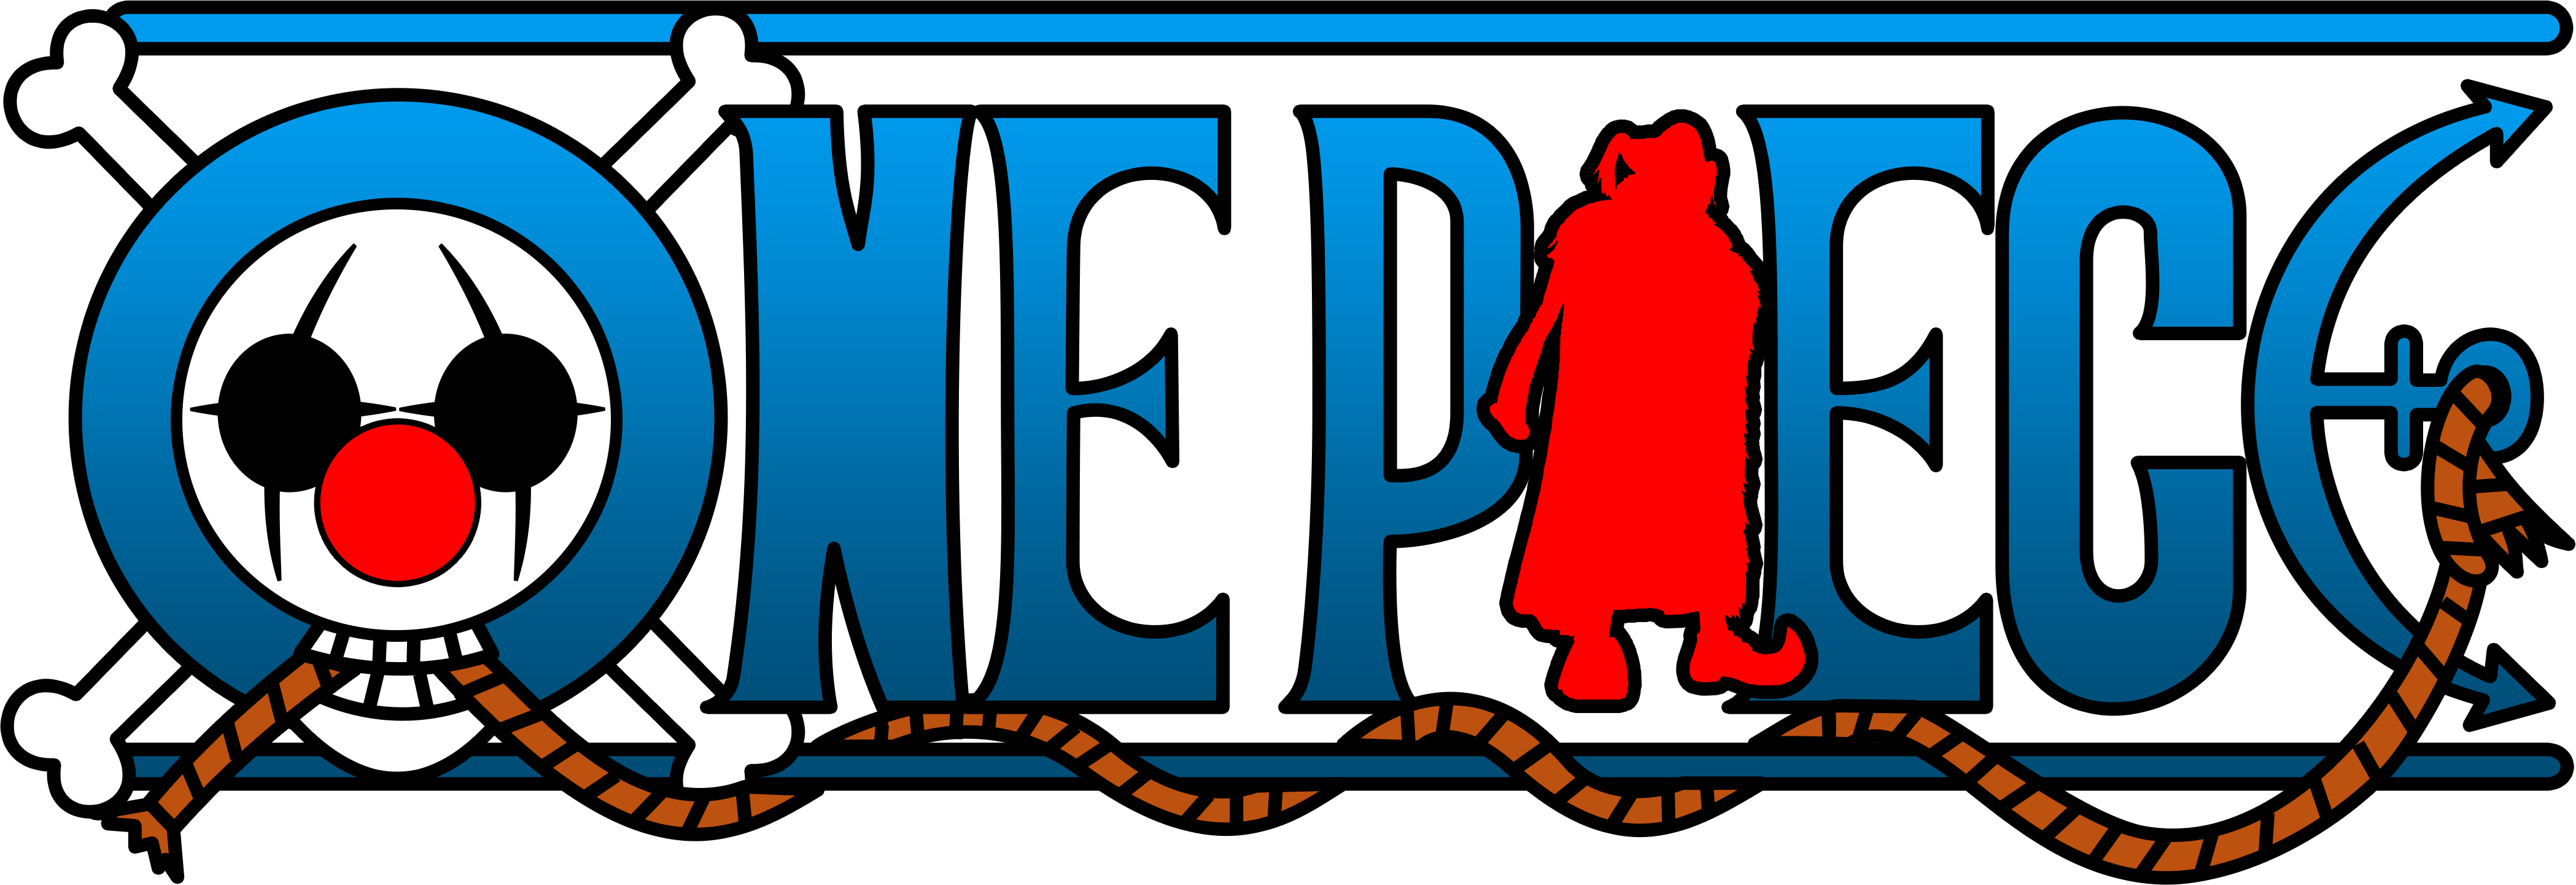 One Piece Logo Flag - ClipArt Best